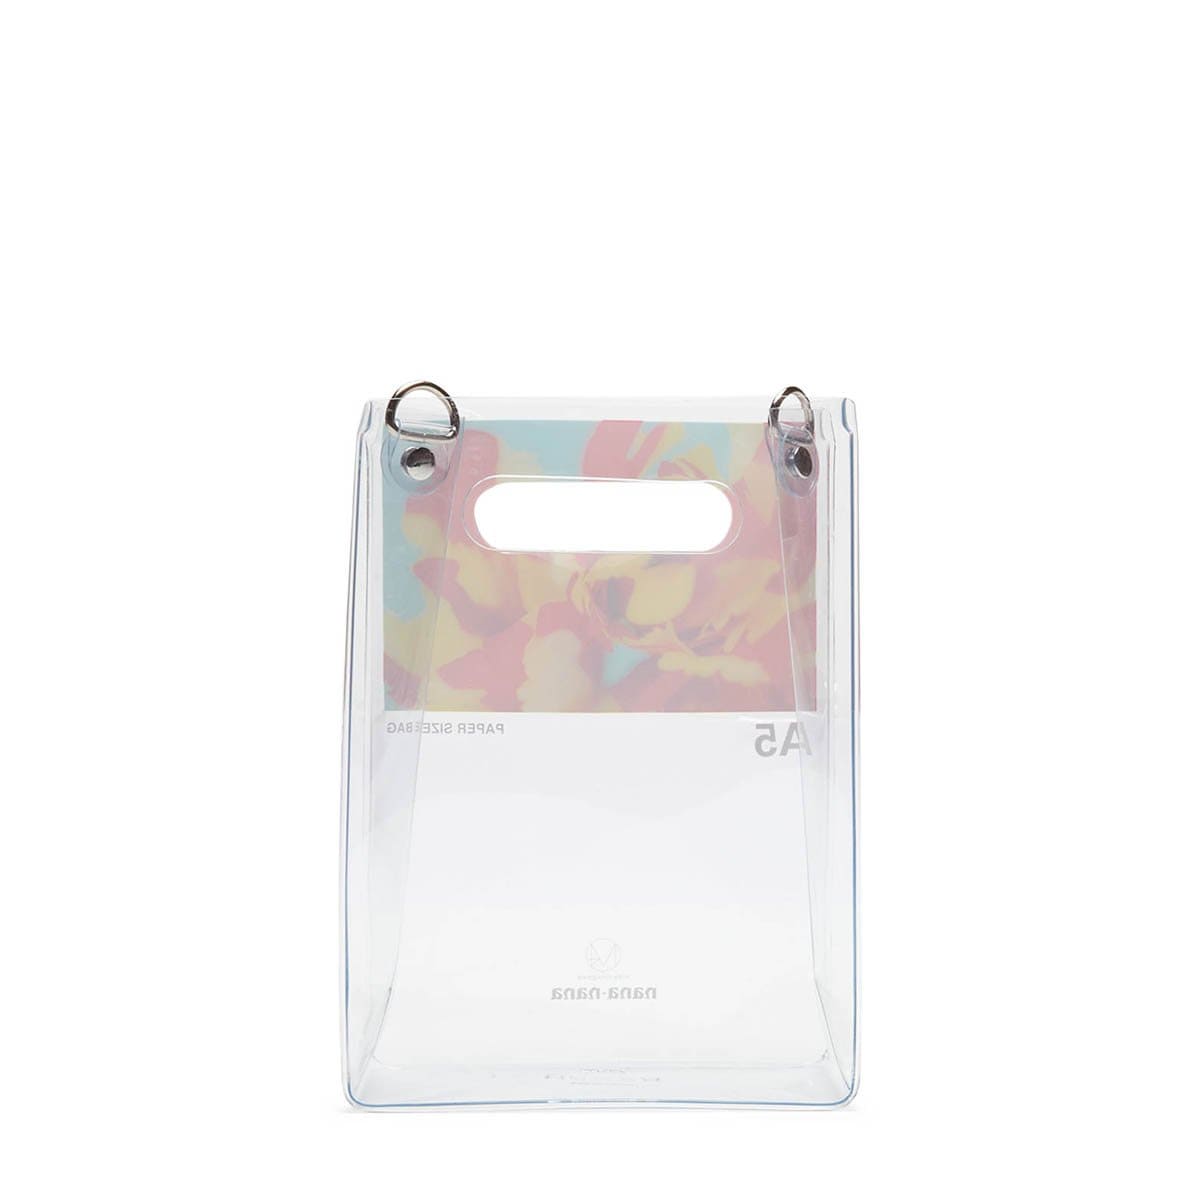 nana-nana Bags & Accessories CLEAR / O/S MIKA NINAGAWA PVC A5